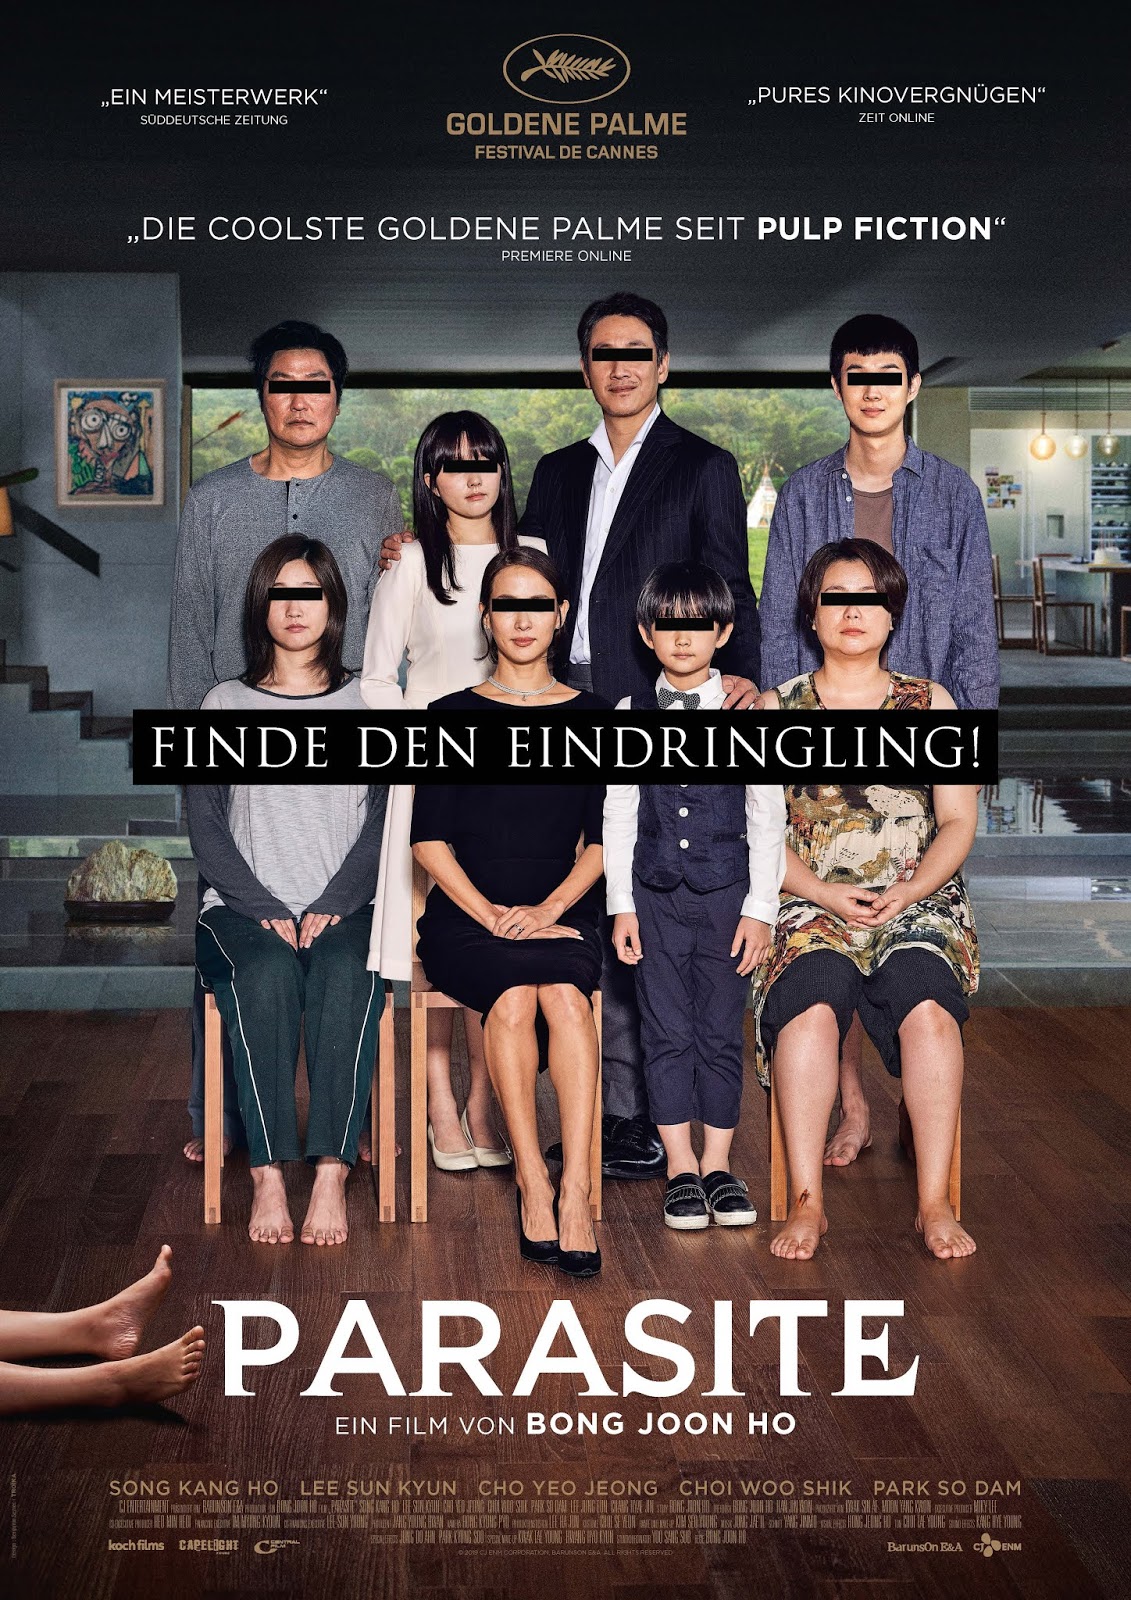 Parasite - Der deutscher Kinotrailer des Bong Joon Ho Films | Kinotipp 